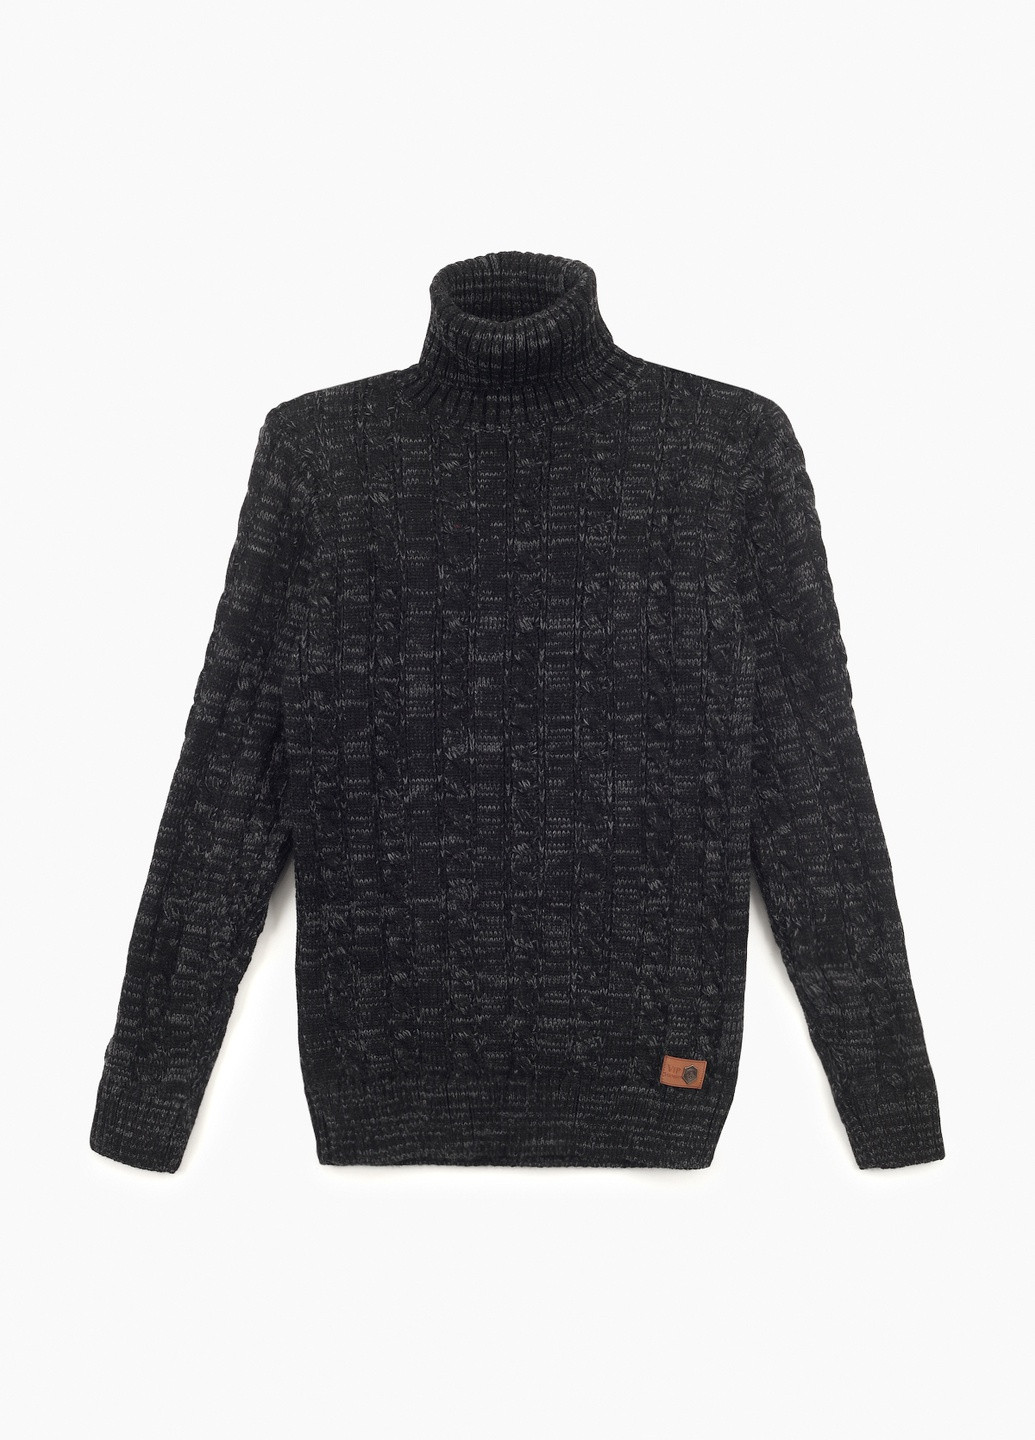 Черный зимний свитер Stendo